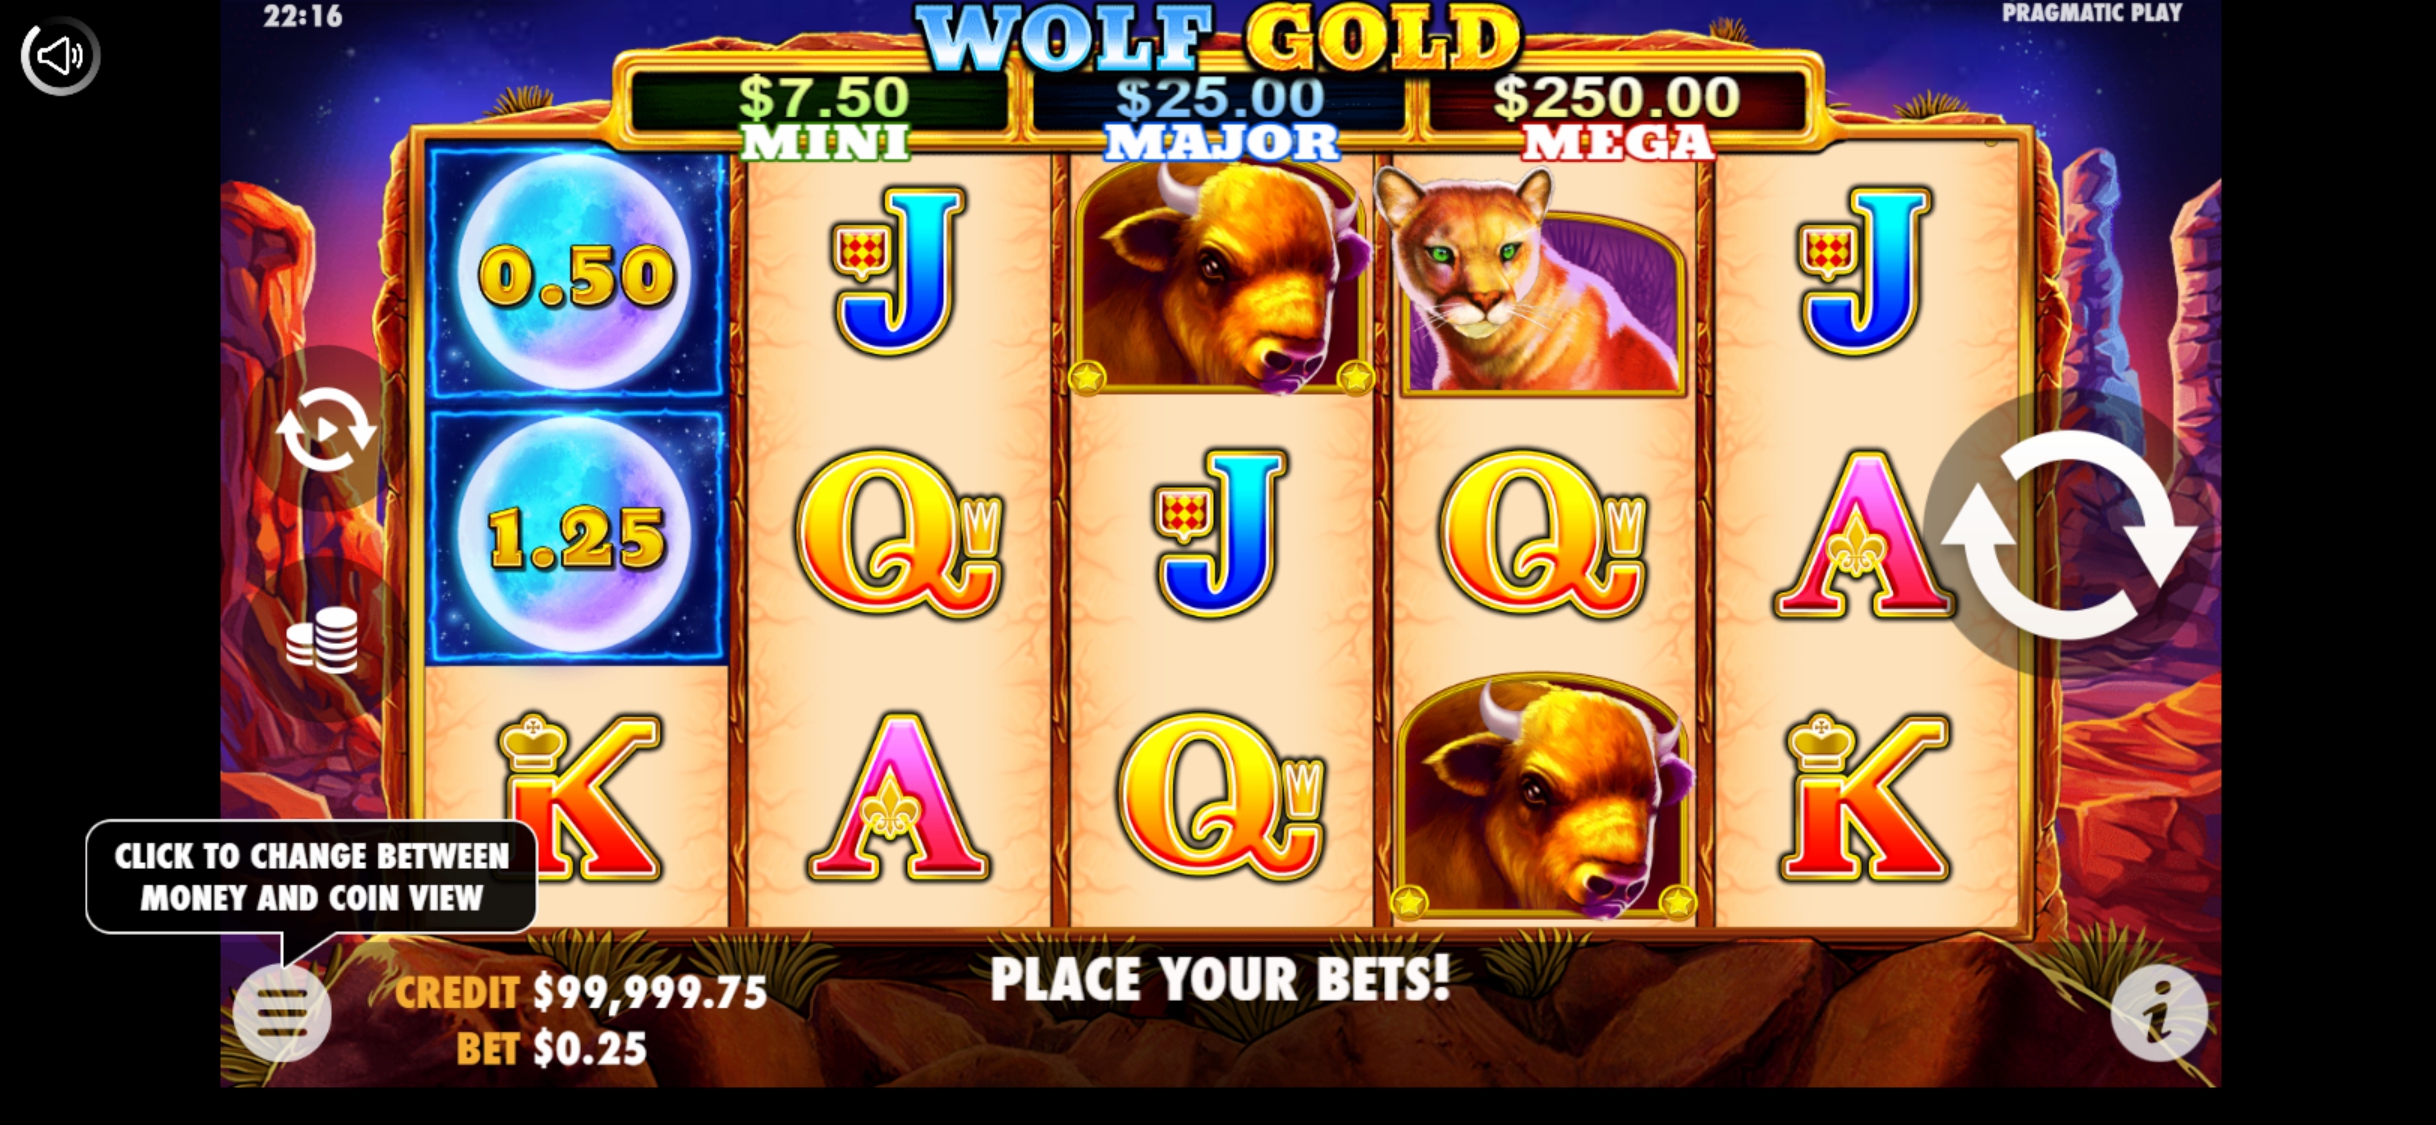 21 Dukes Casino Mobile Slot Games Review